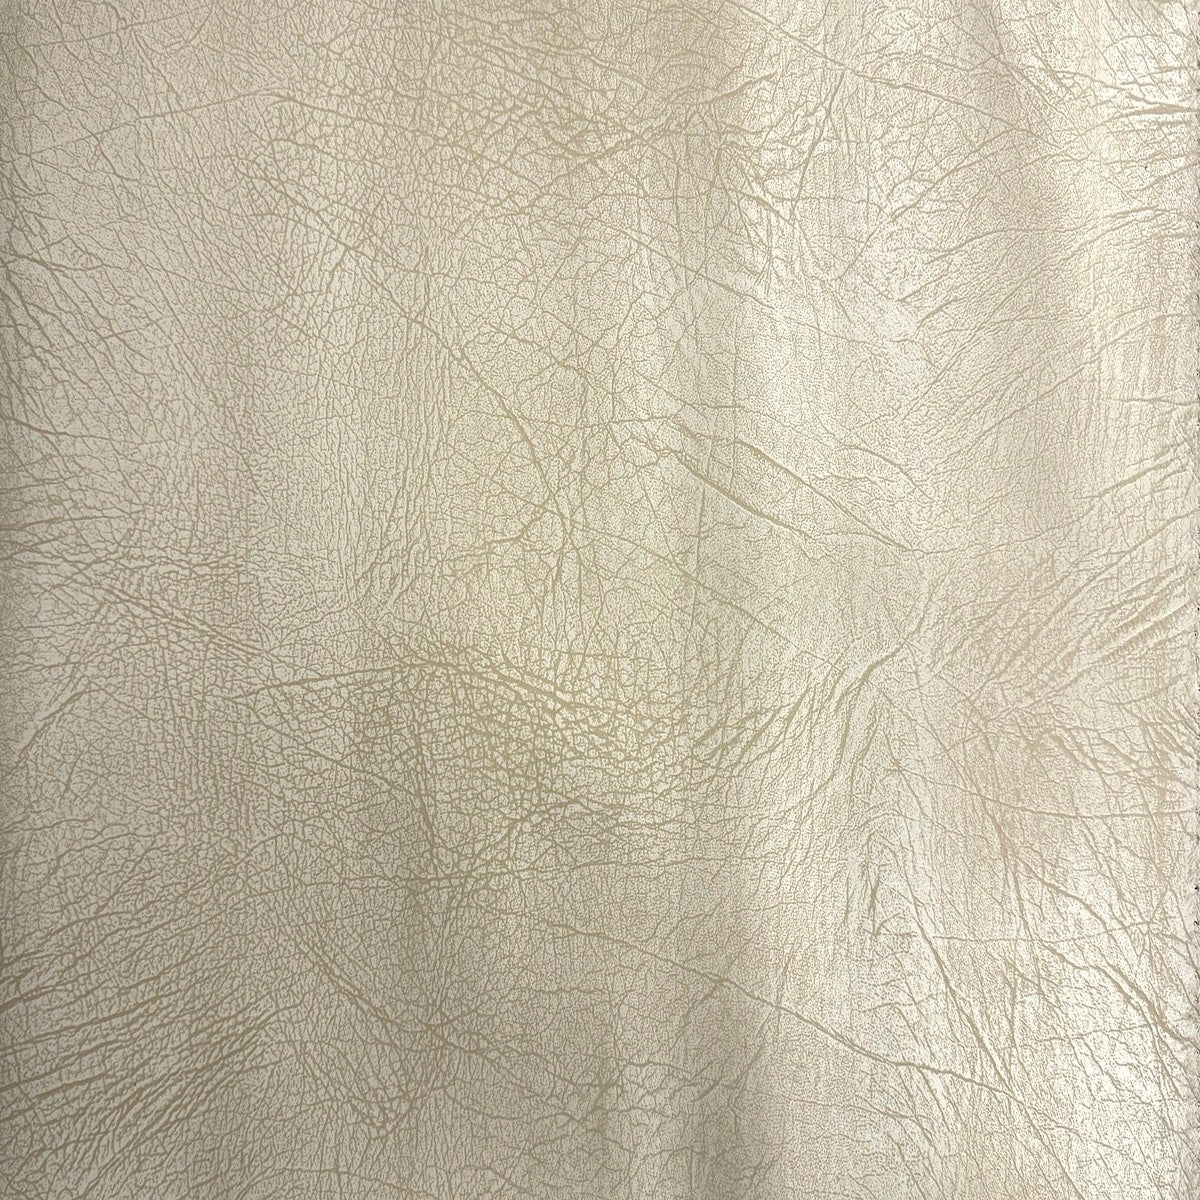 Tissu vinyle en suède imitation cuir vintage beige vieilli